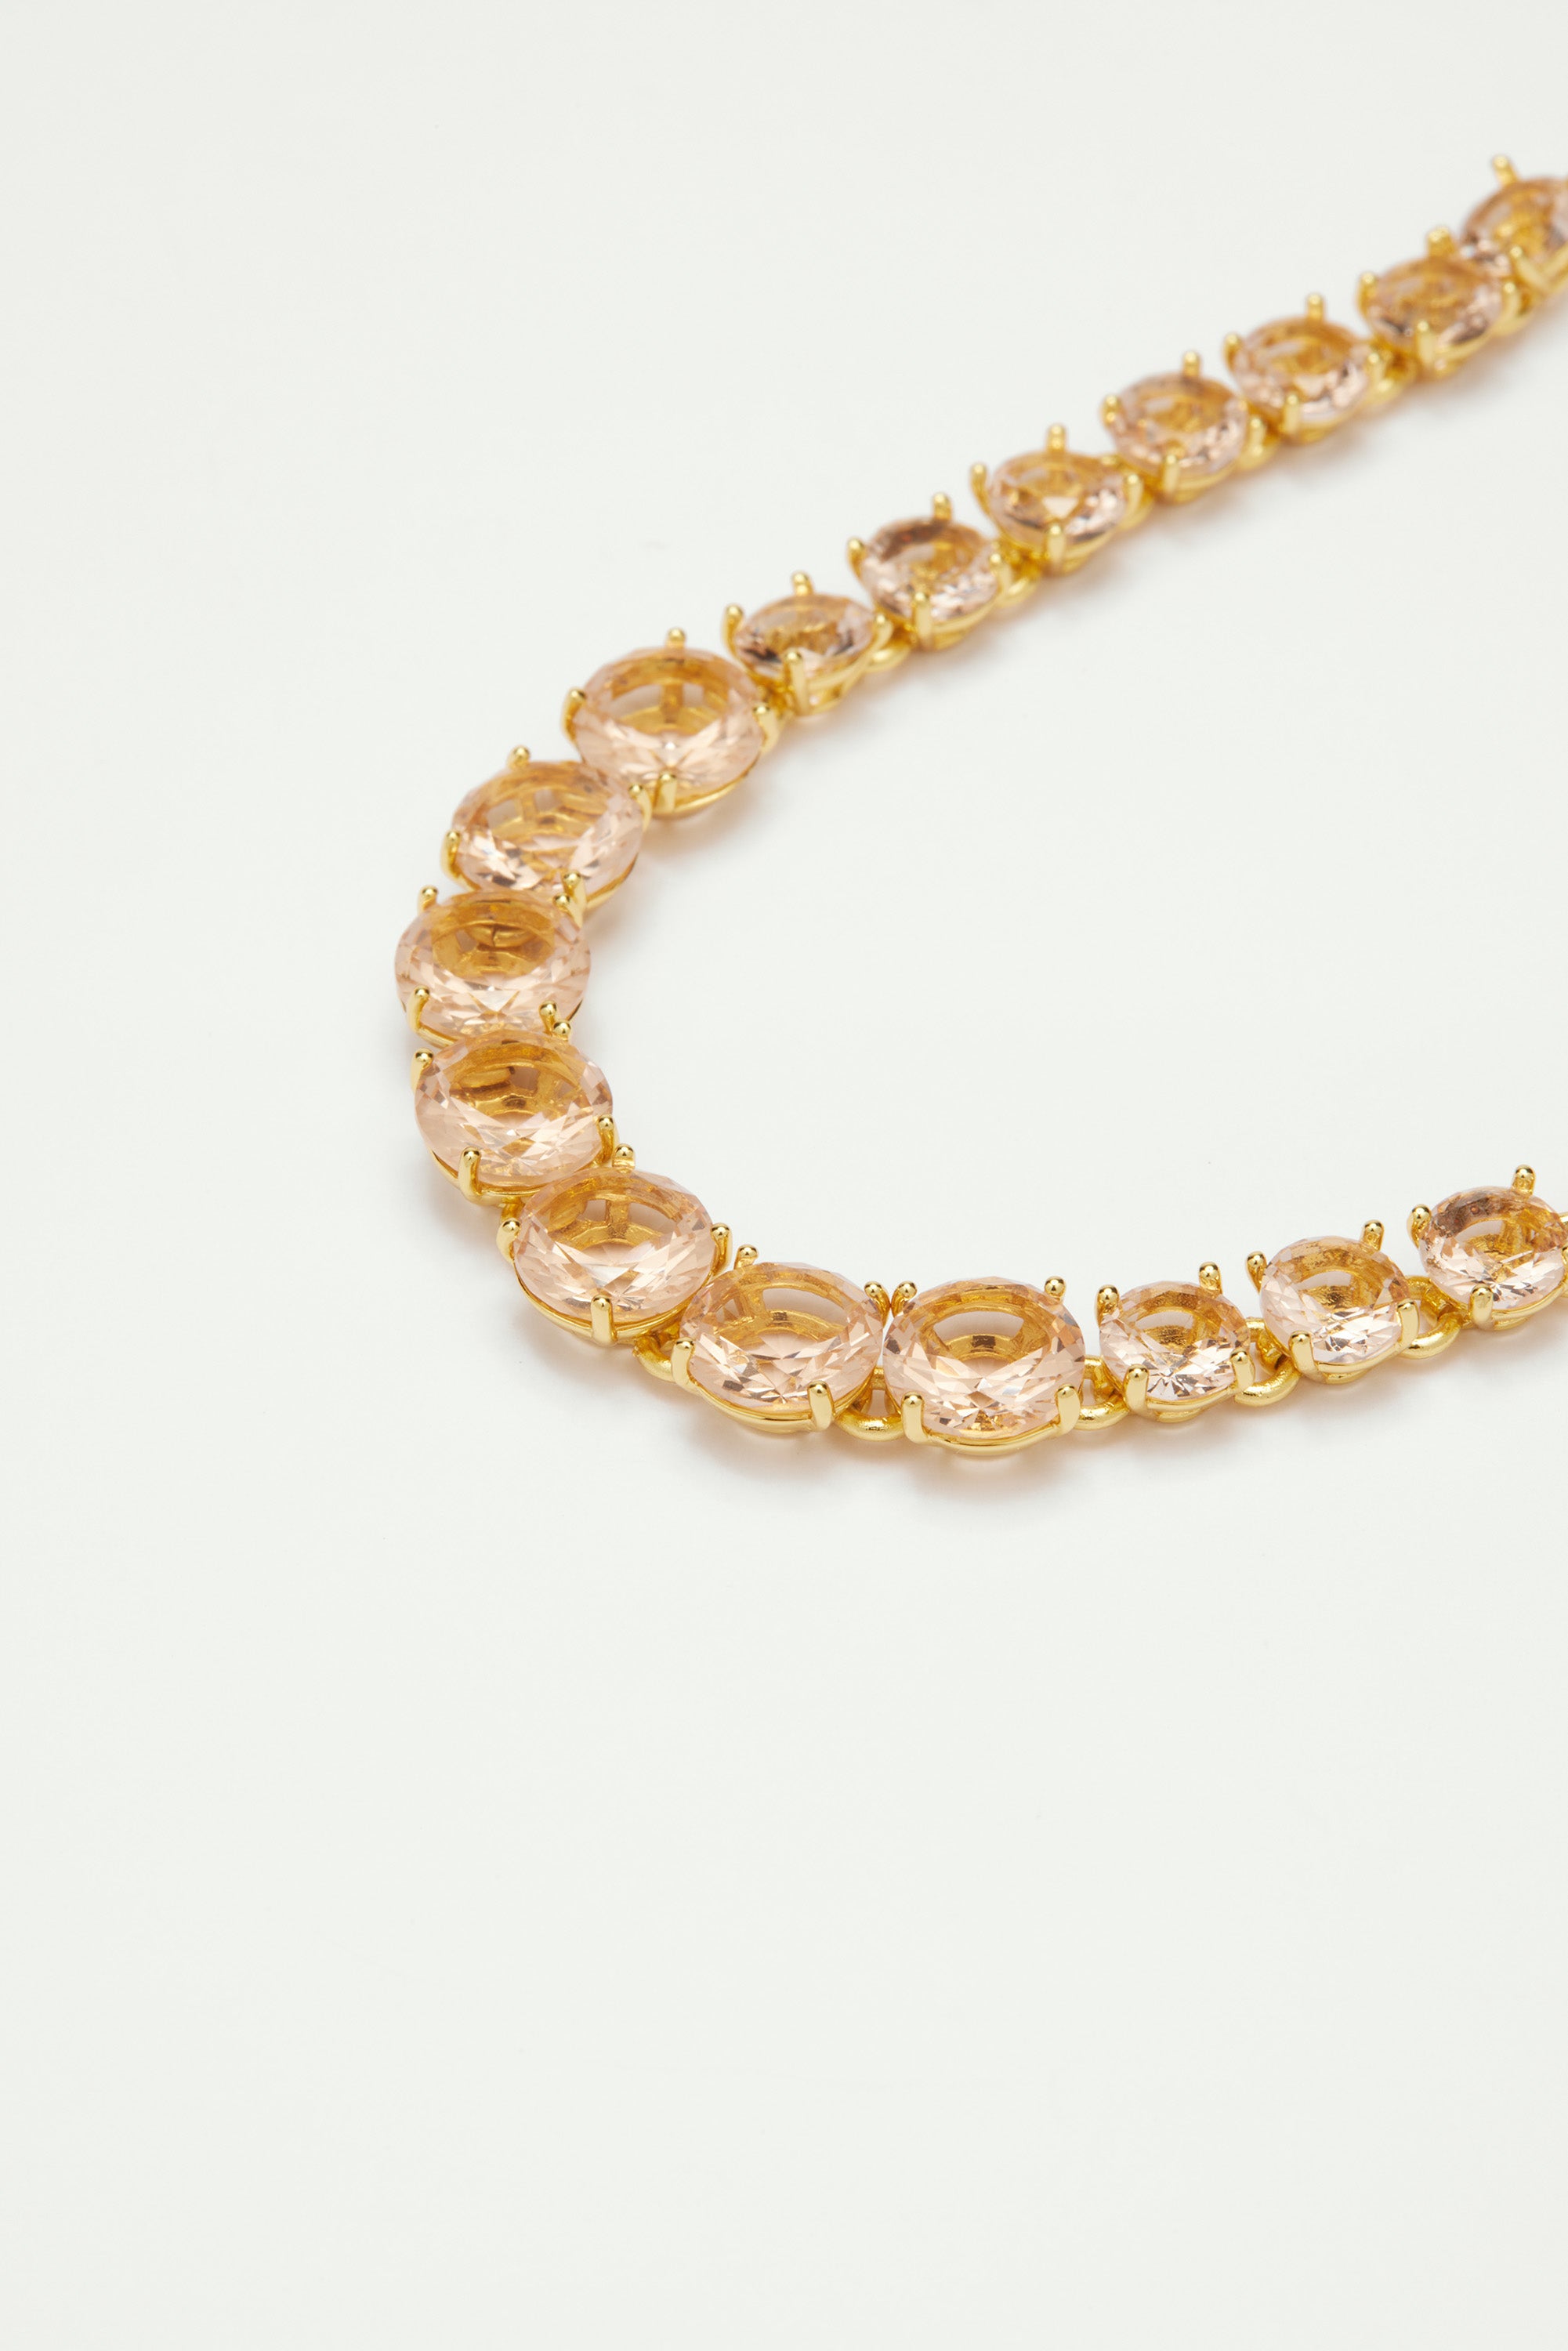 Apricot pink diamantine single row fine bracelet